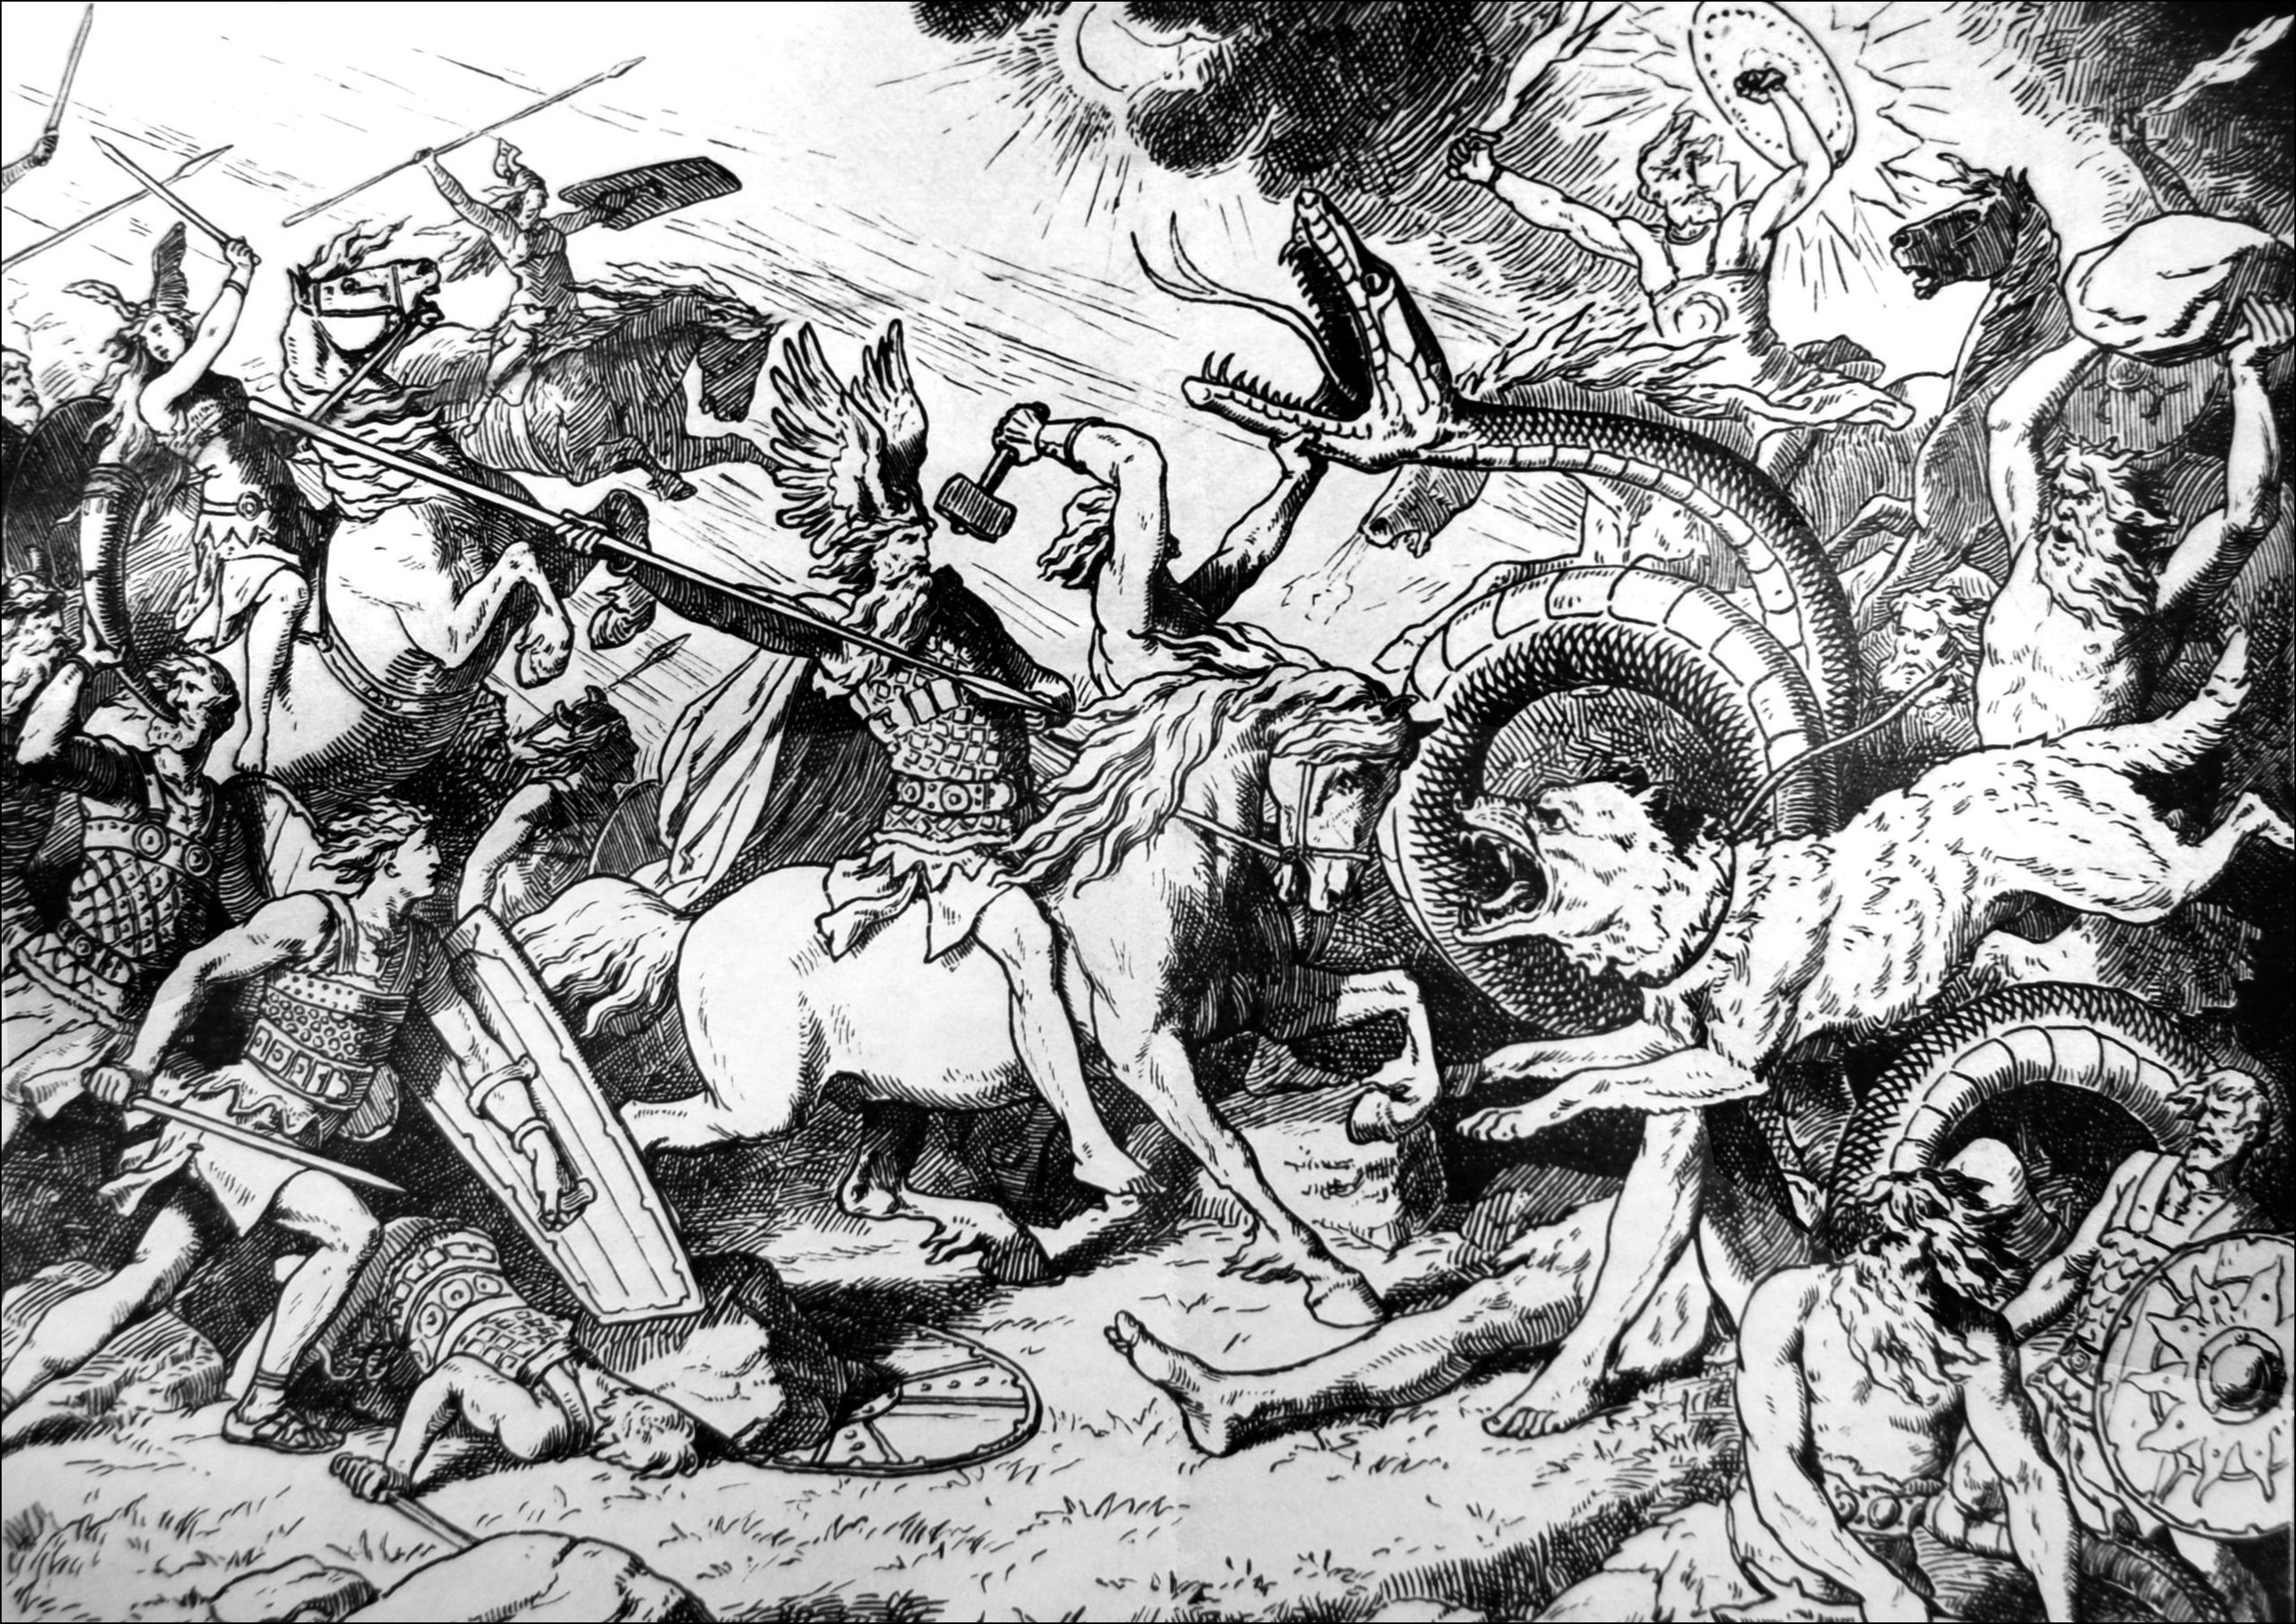 Ragnarok, Viking doomsday - illustration by Johannes Gehrts (1855, 1921). Ragnarök is the apocalypse in Norse mythology. It